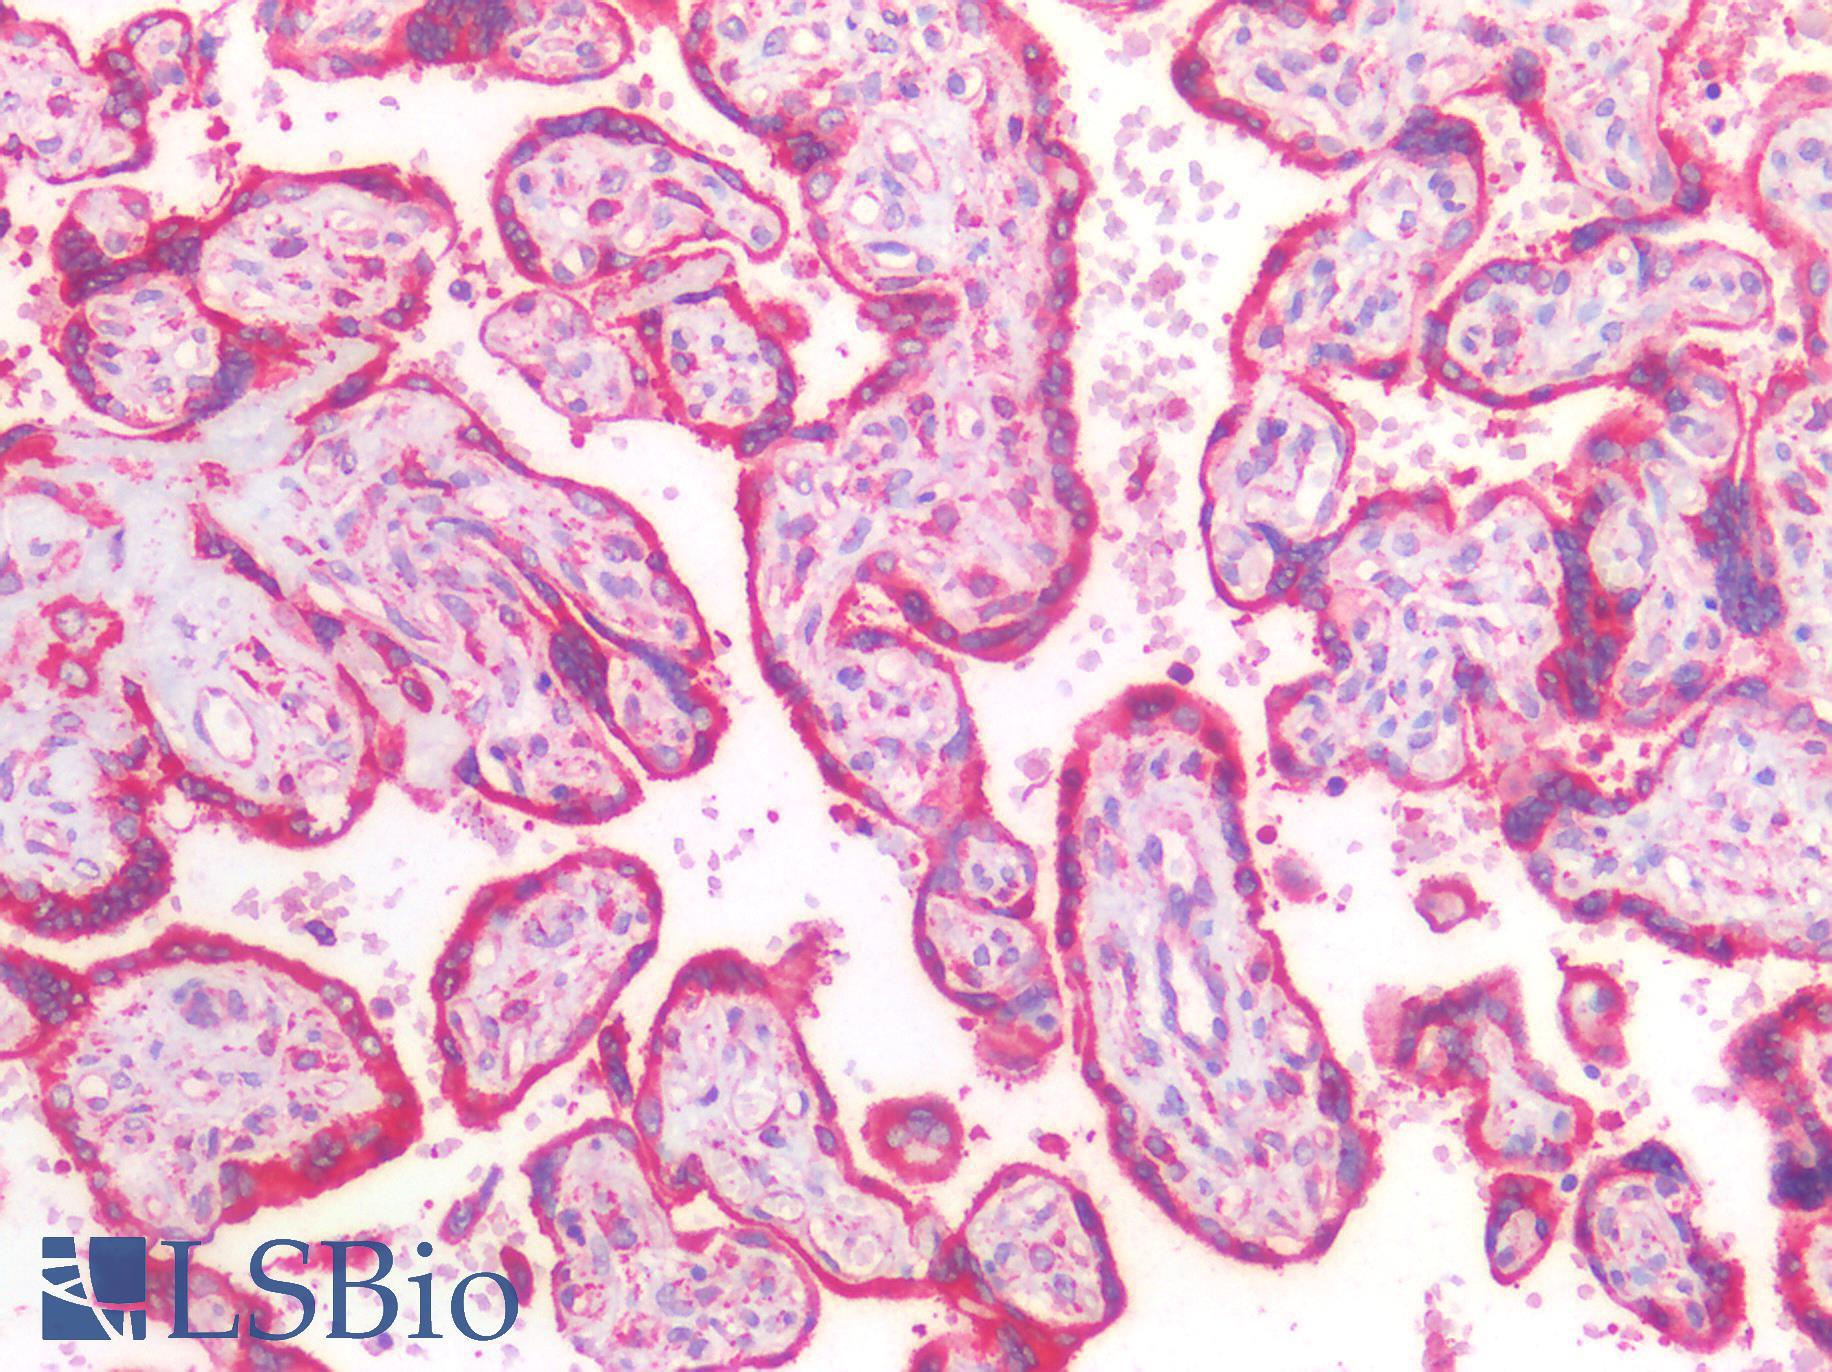 HSPA5 / GRP78 / BiP Antibody - Human Placenta: Formalin-Fixed, Paraffin-Embedded (FFPE)